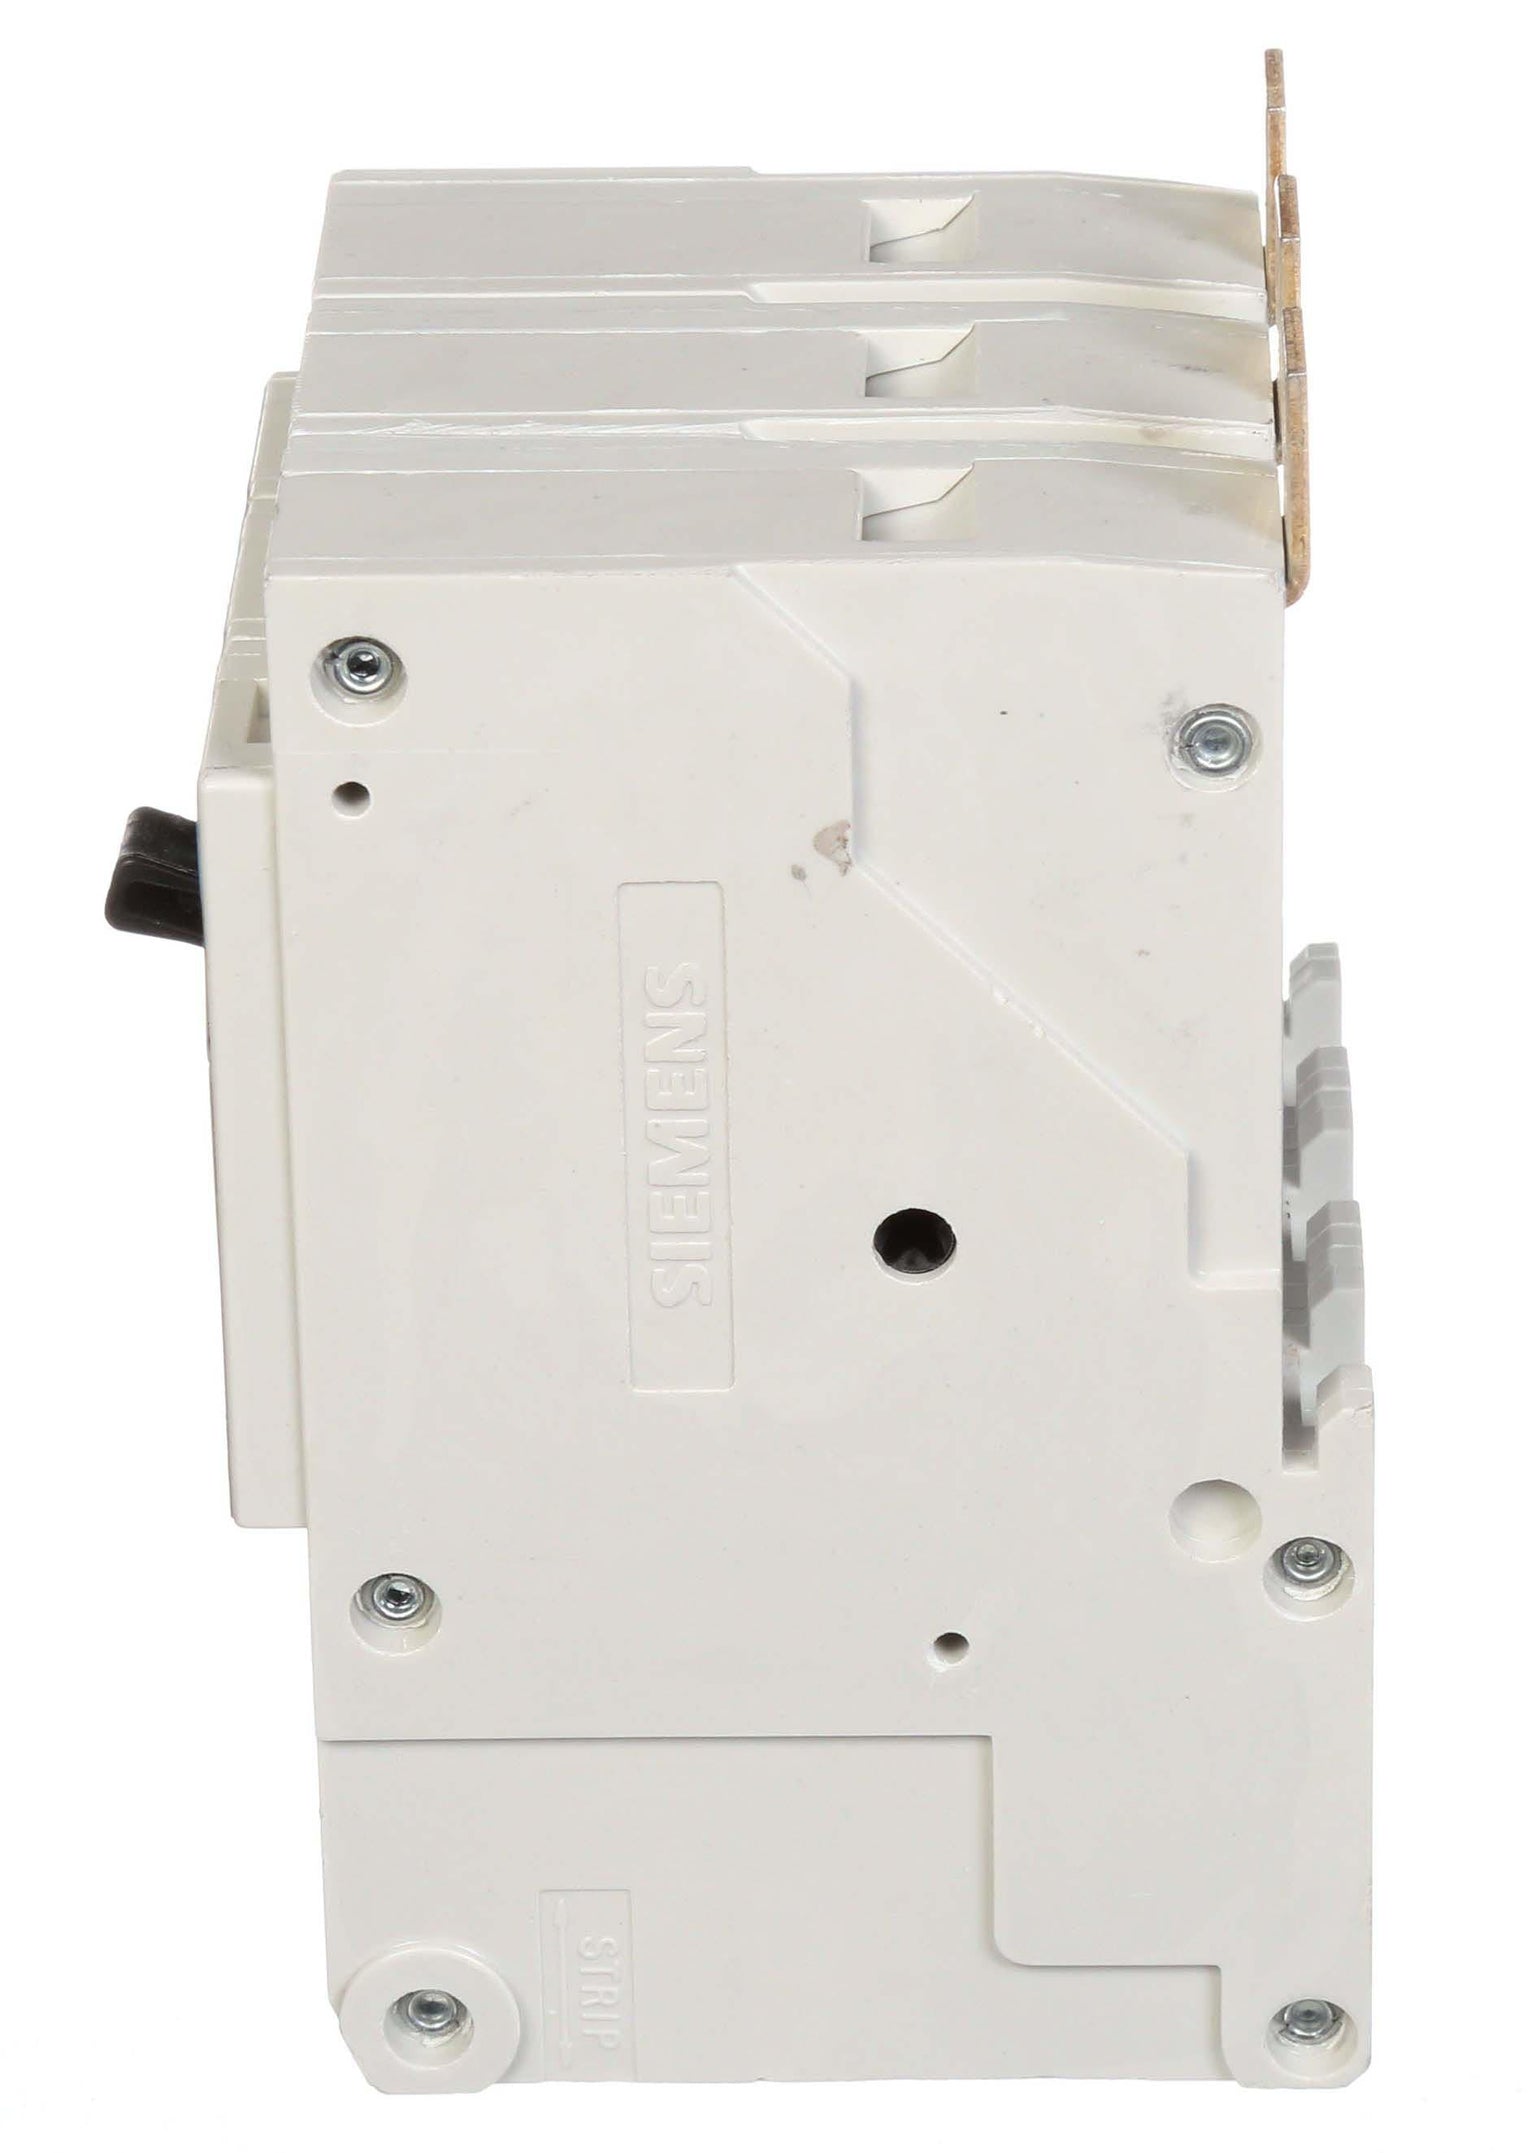 NGB3B030B - Siemens - Molded Case Circuit Breaker